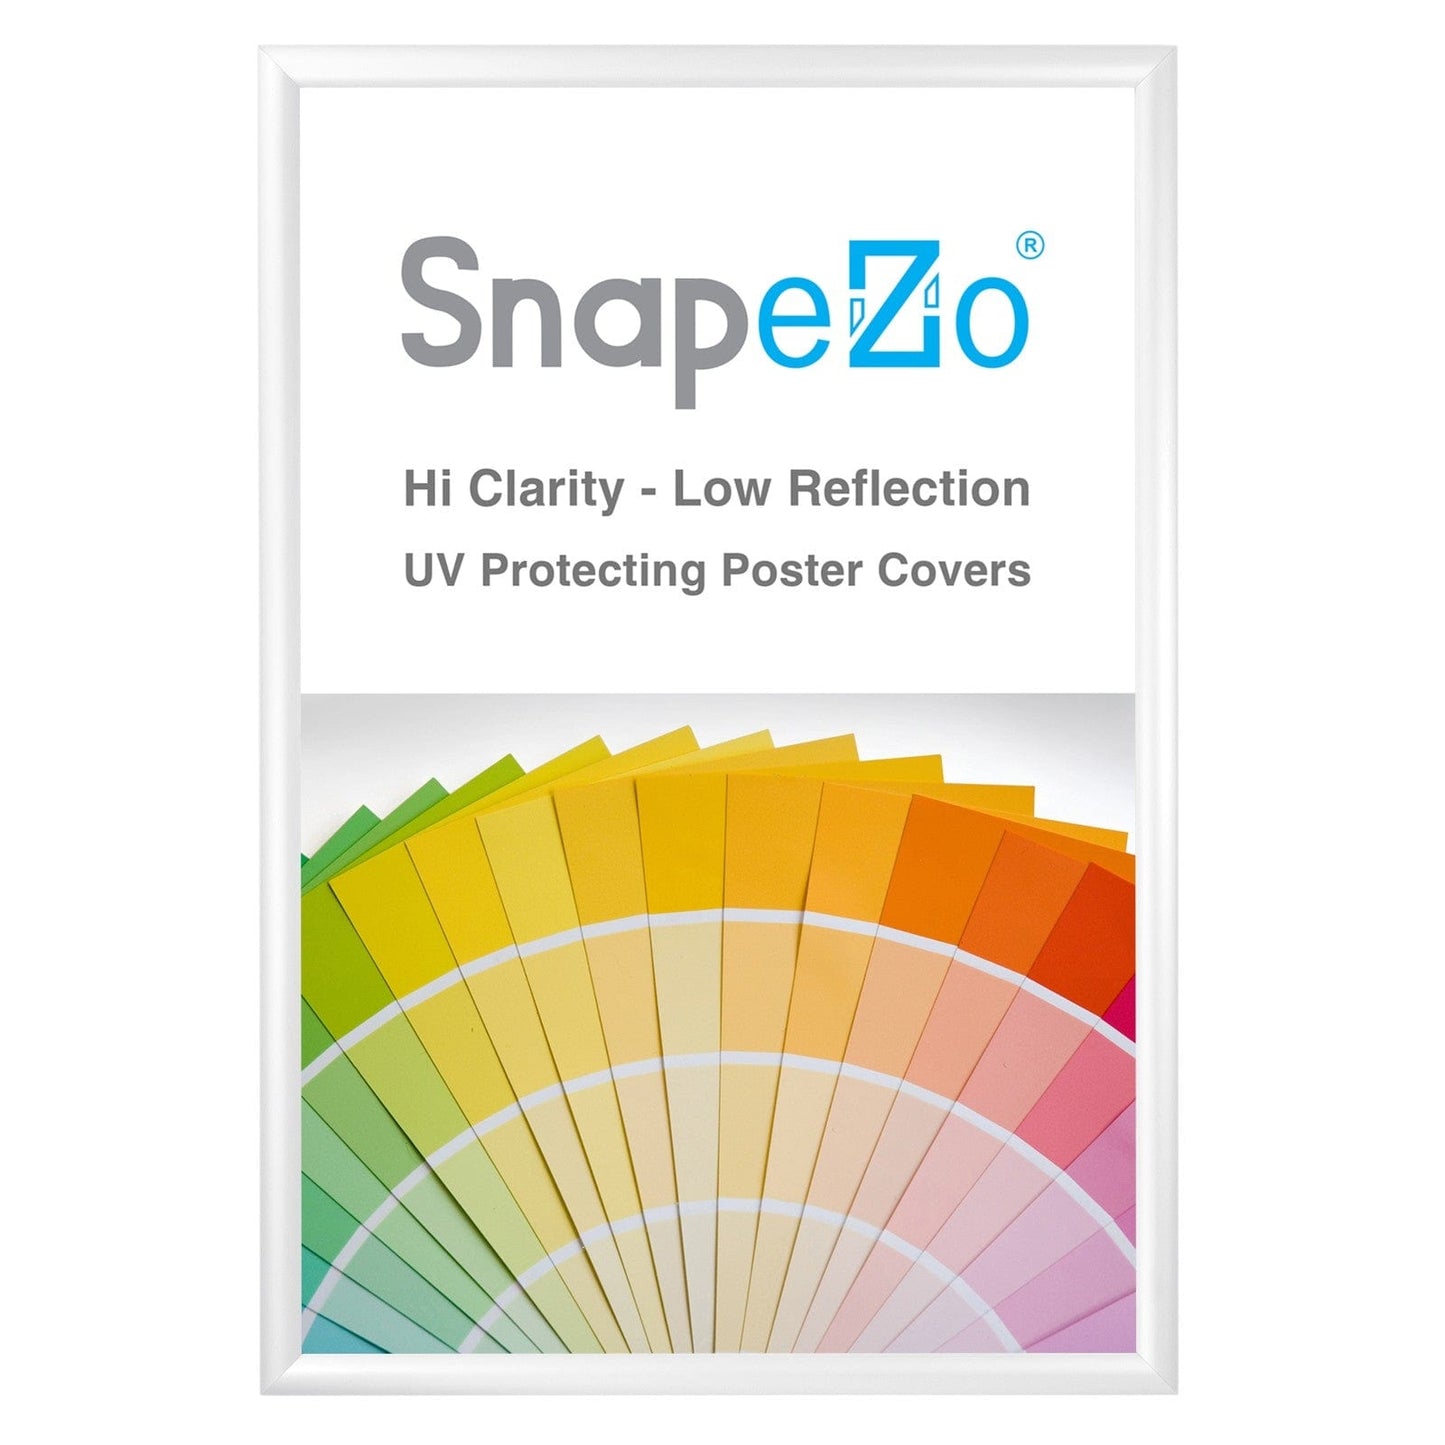 23x34 White SnapeZo® Snap Frame - 1.2" Profile - Snap Frames Direct